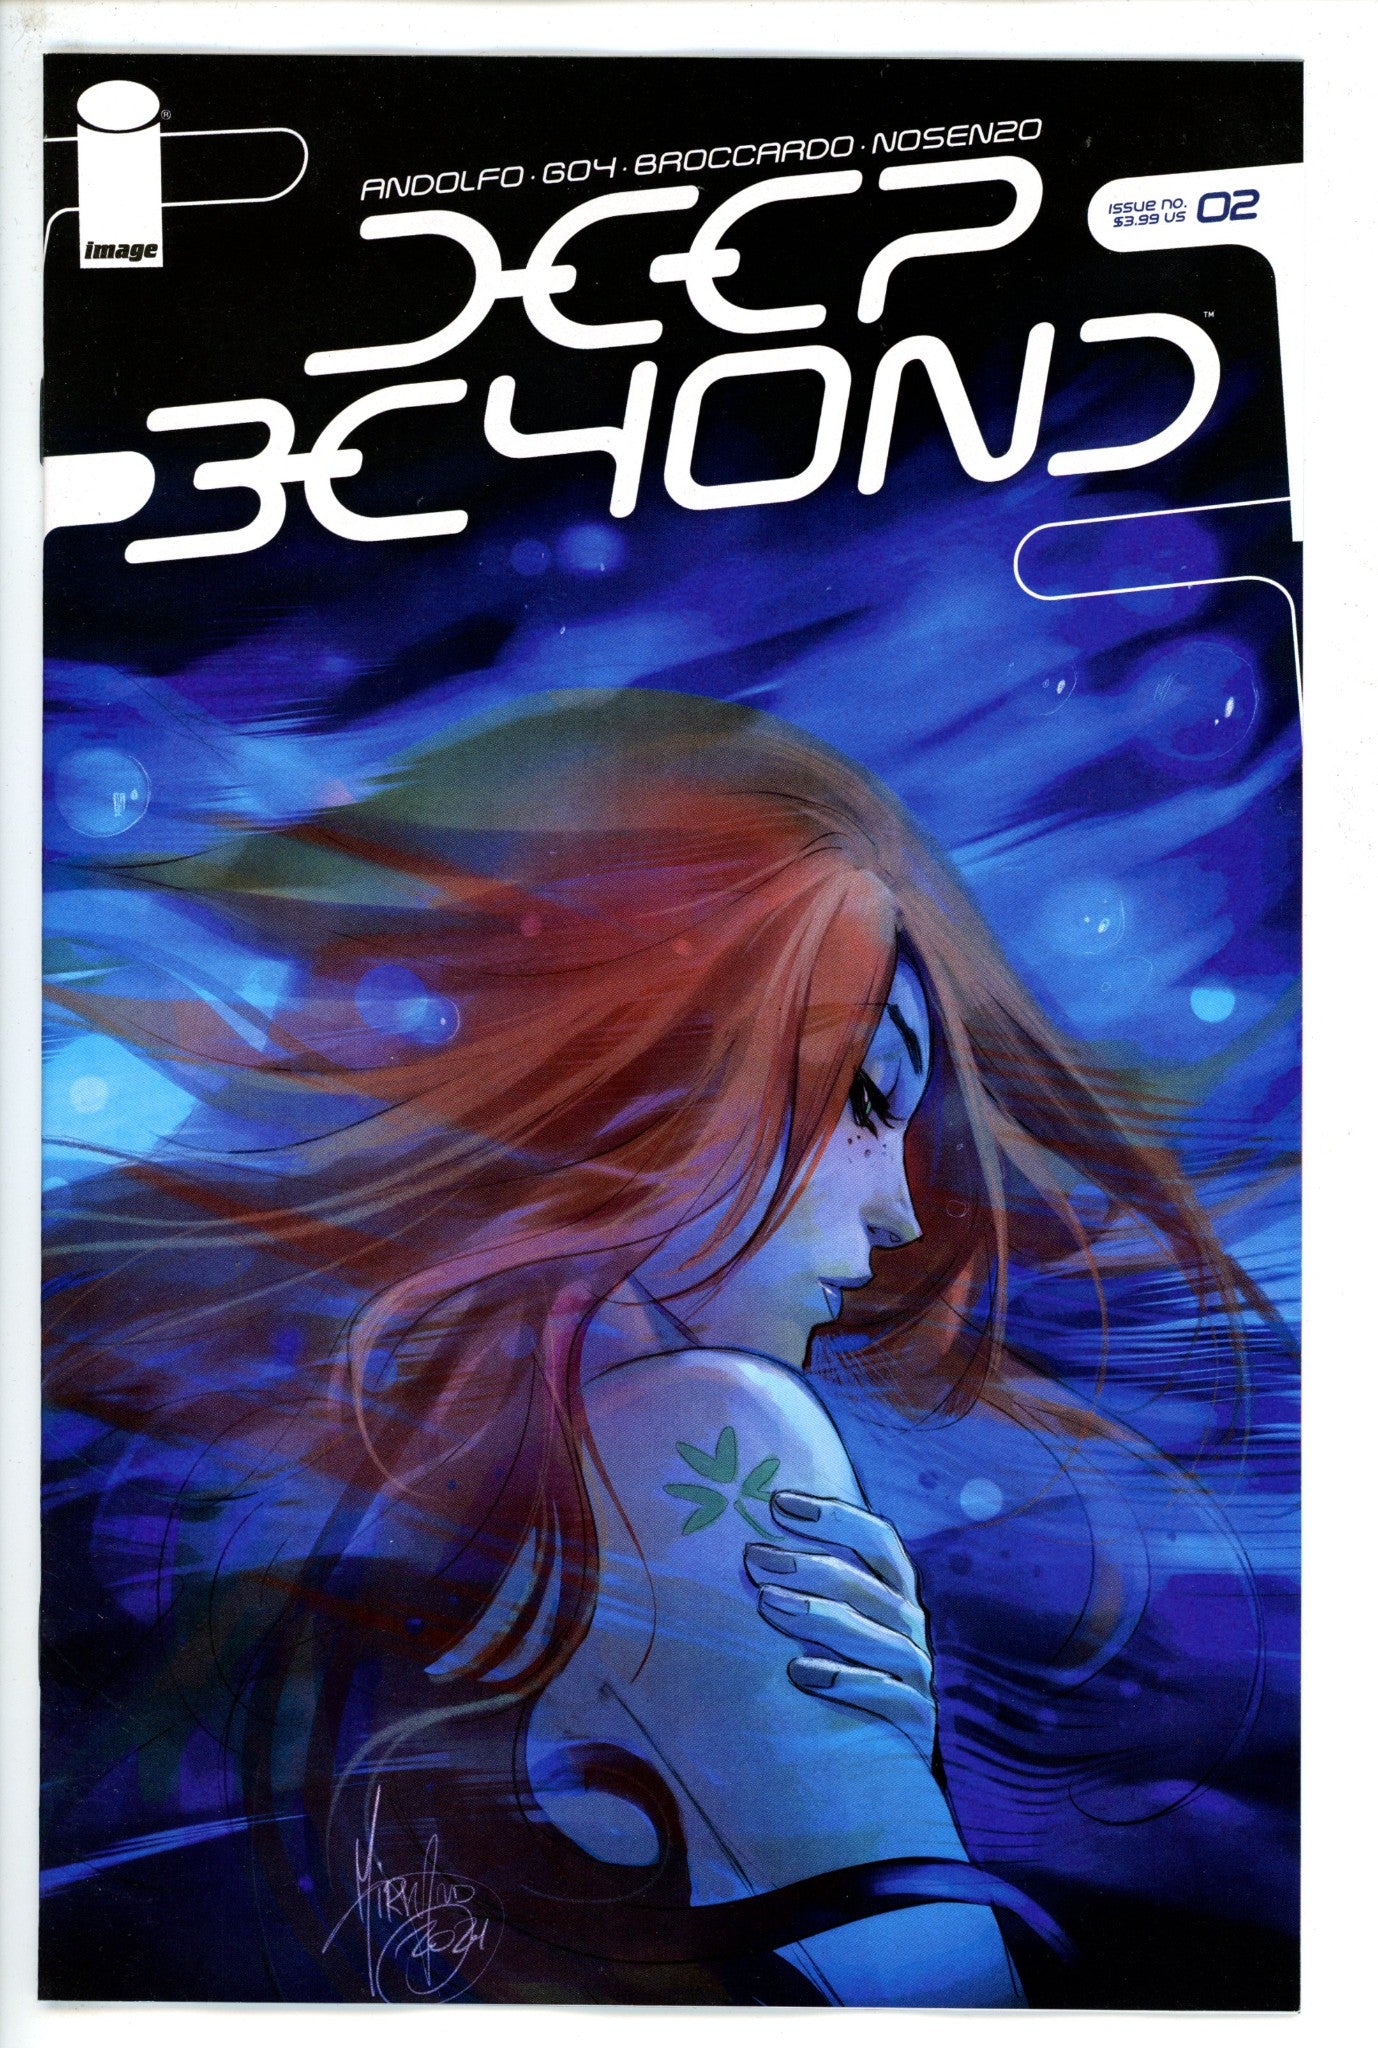 Deep Beyond 2 Andolfo Variant-Image-CaptCan Comics Inc